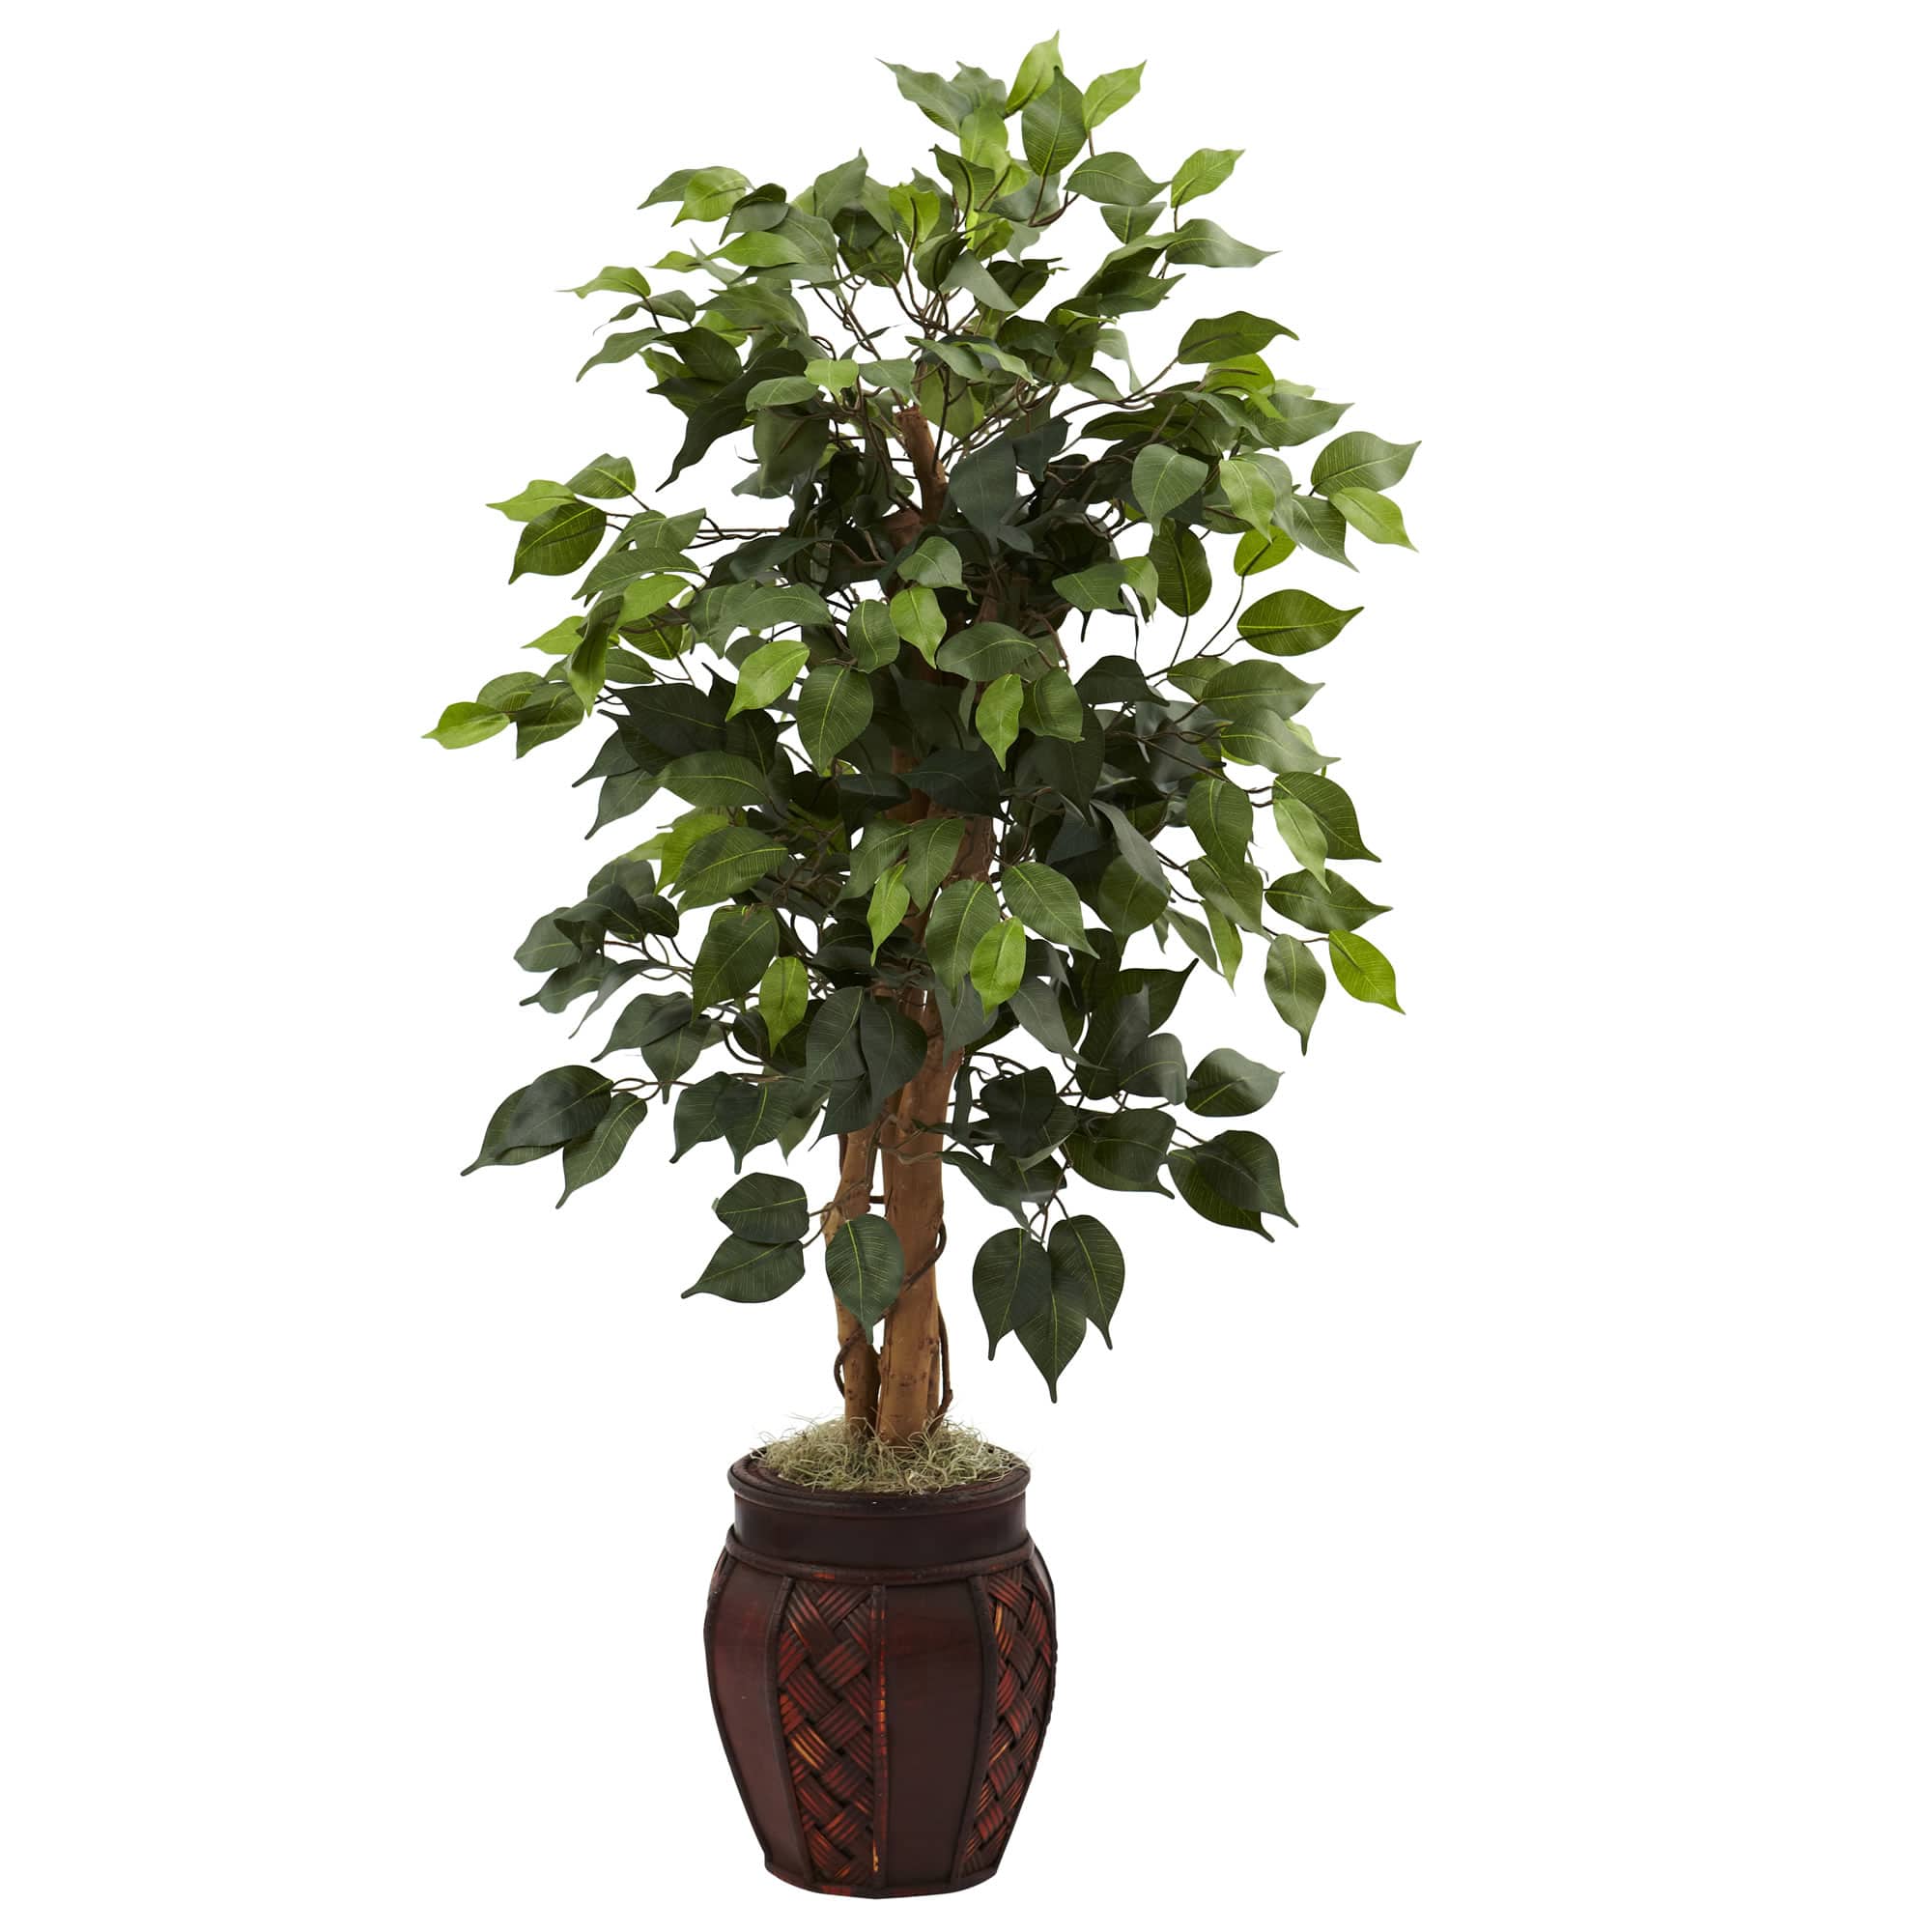 3.5ft. Ficus Tree in Decorative Planter